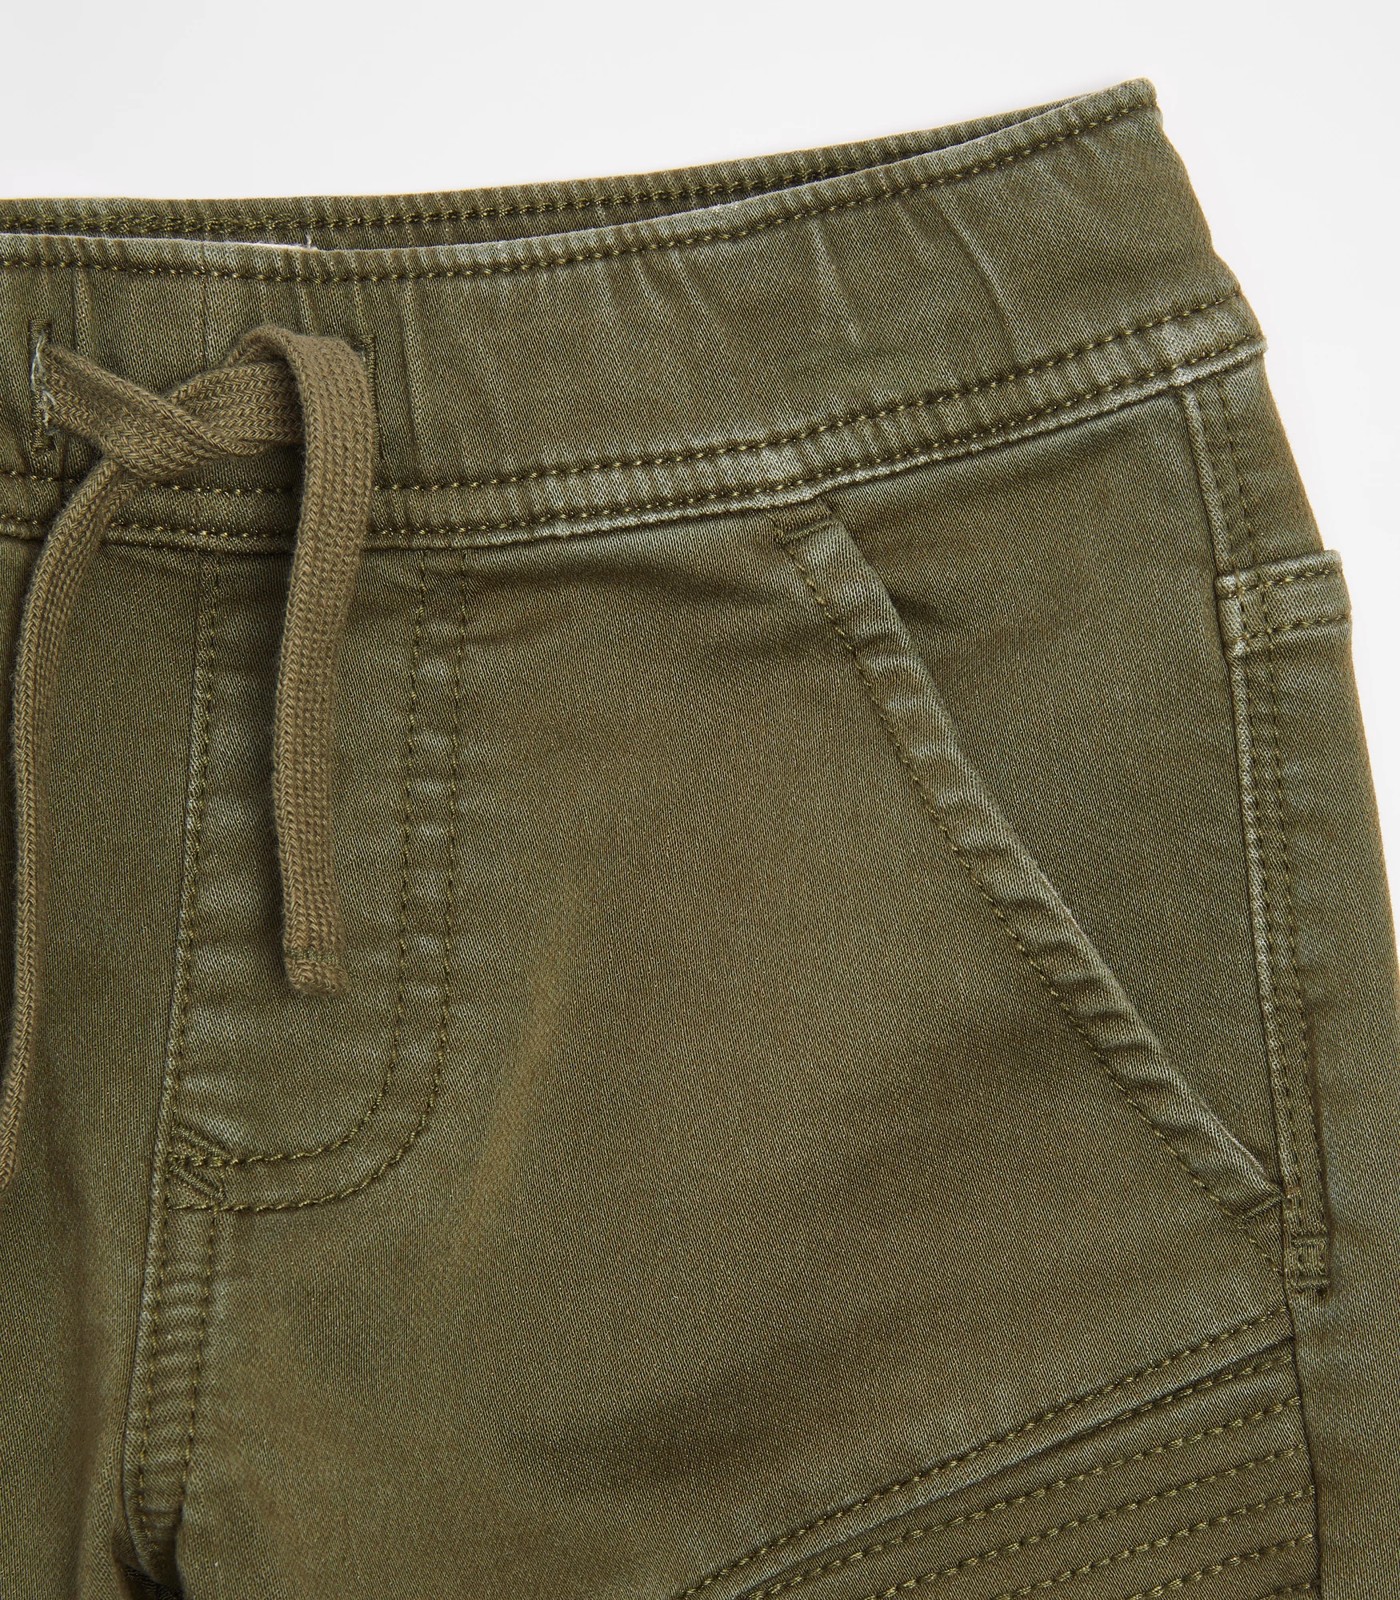 Pull On Wonder Denim Shorts | Target Australia